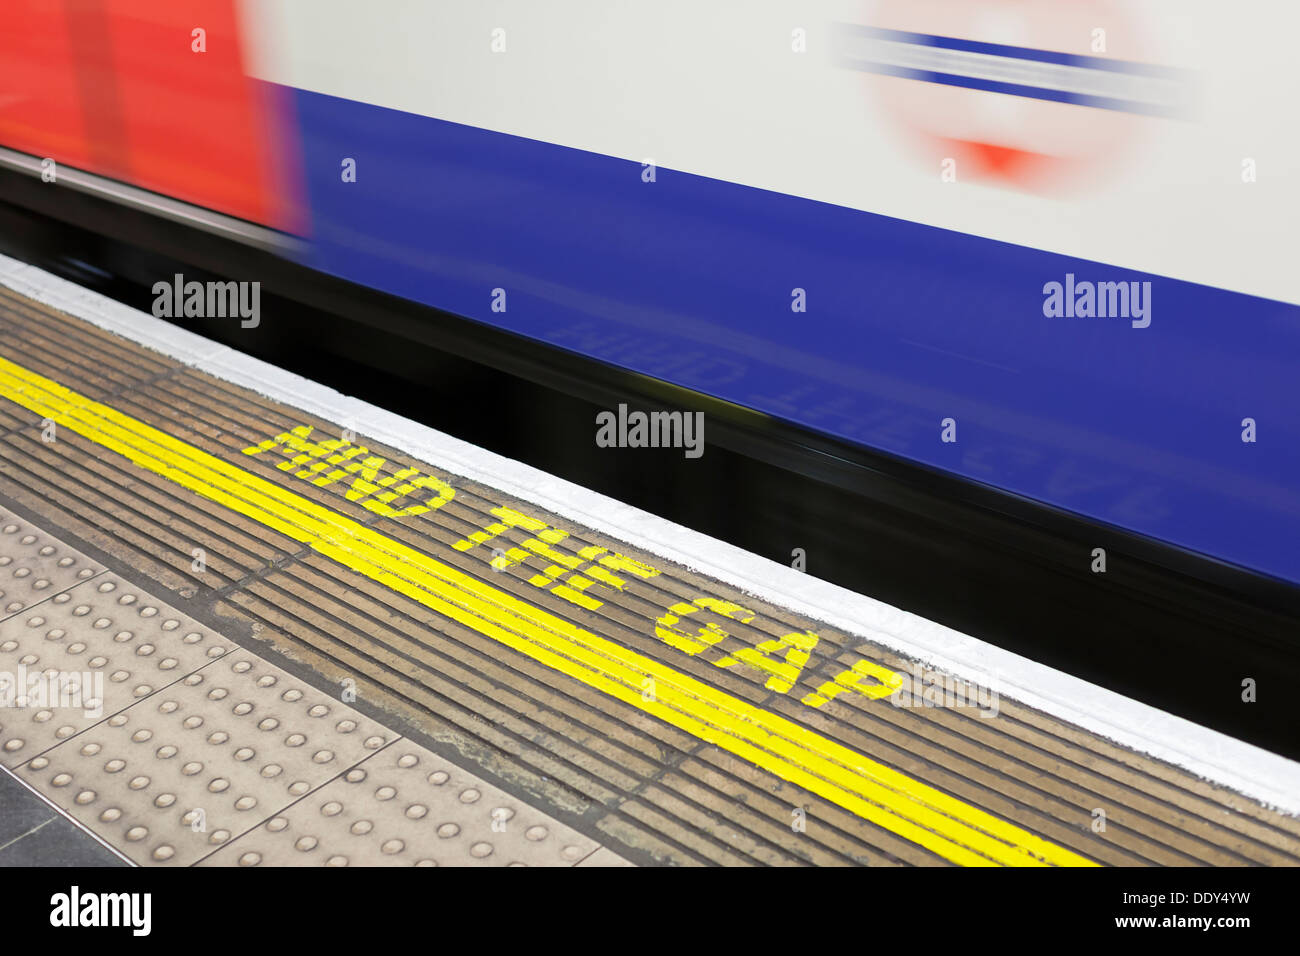 Mind the gap warning at station on the London Underground, England Stock Photo